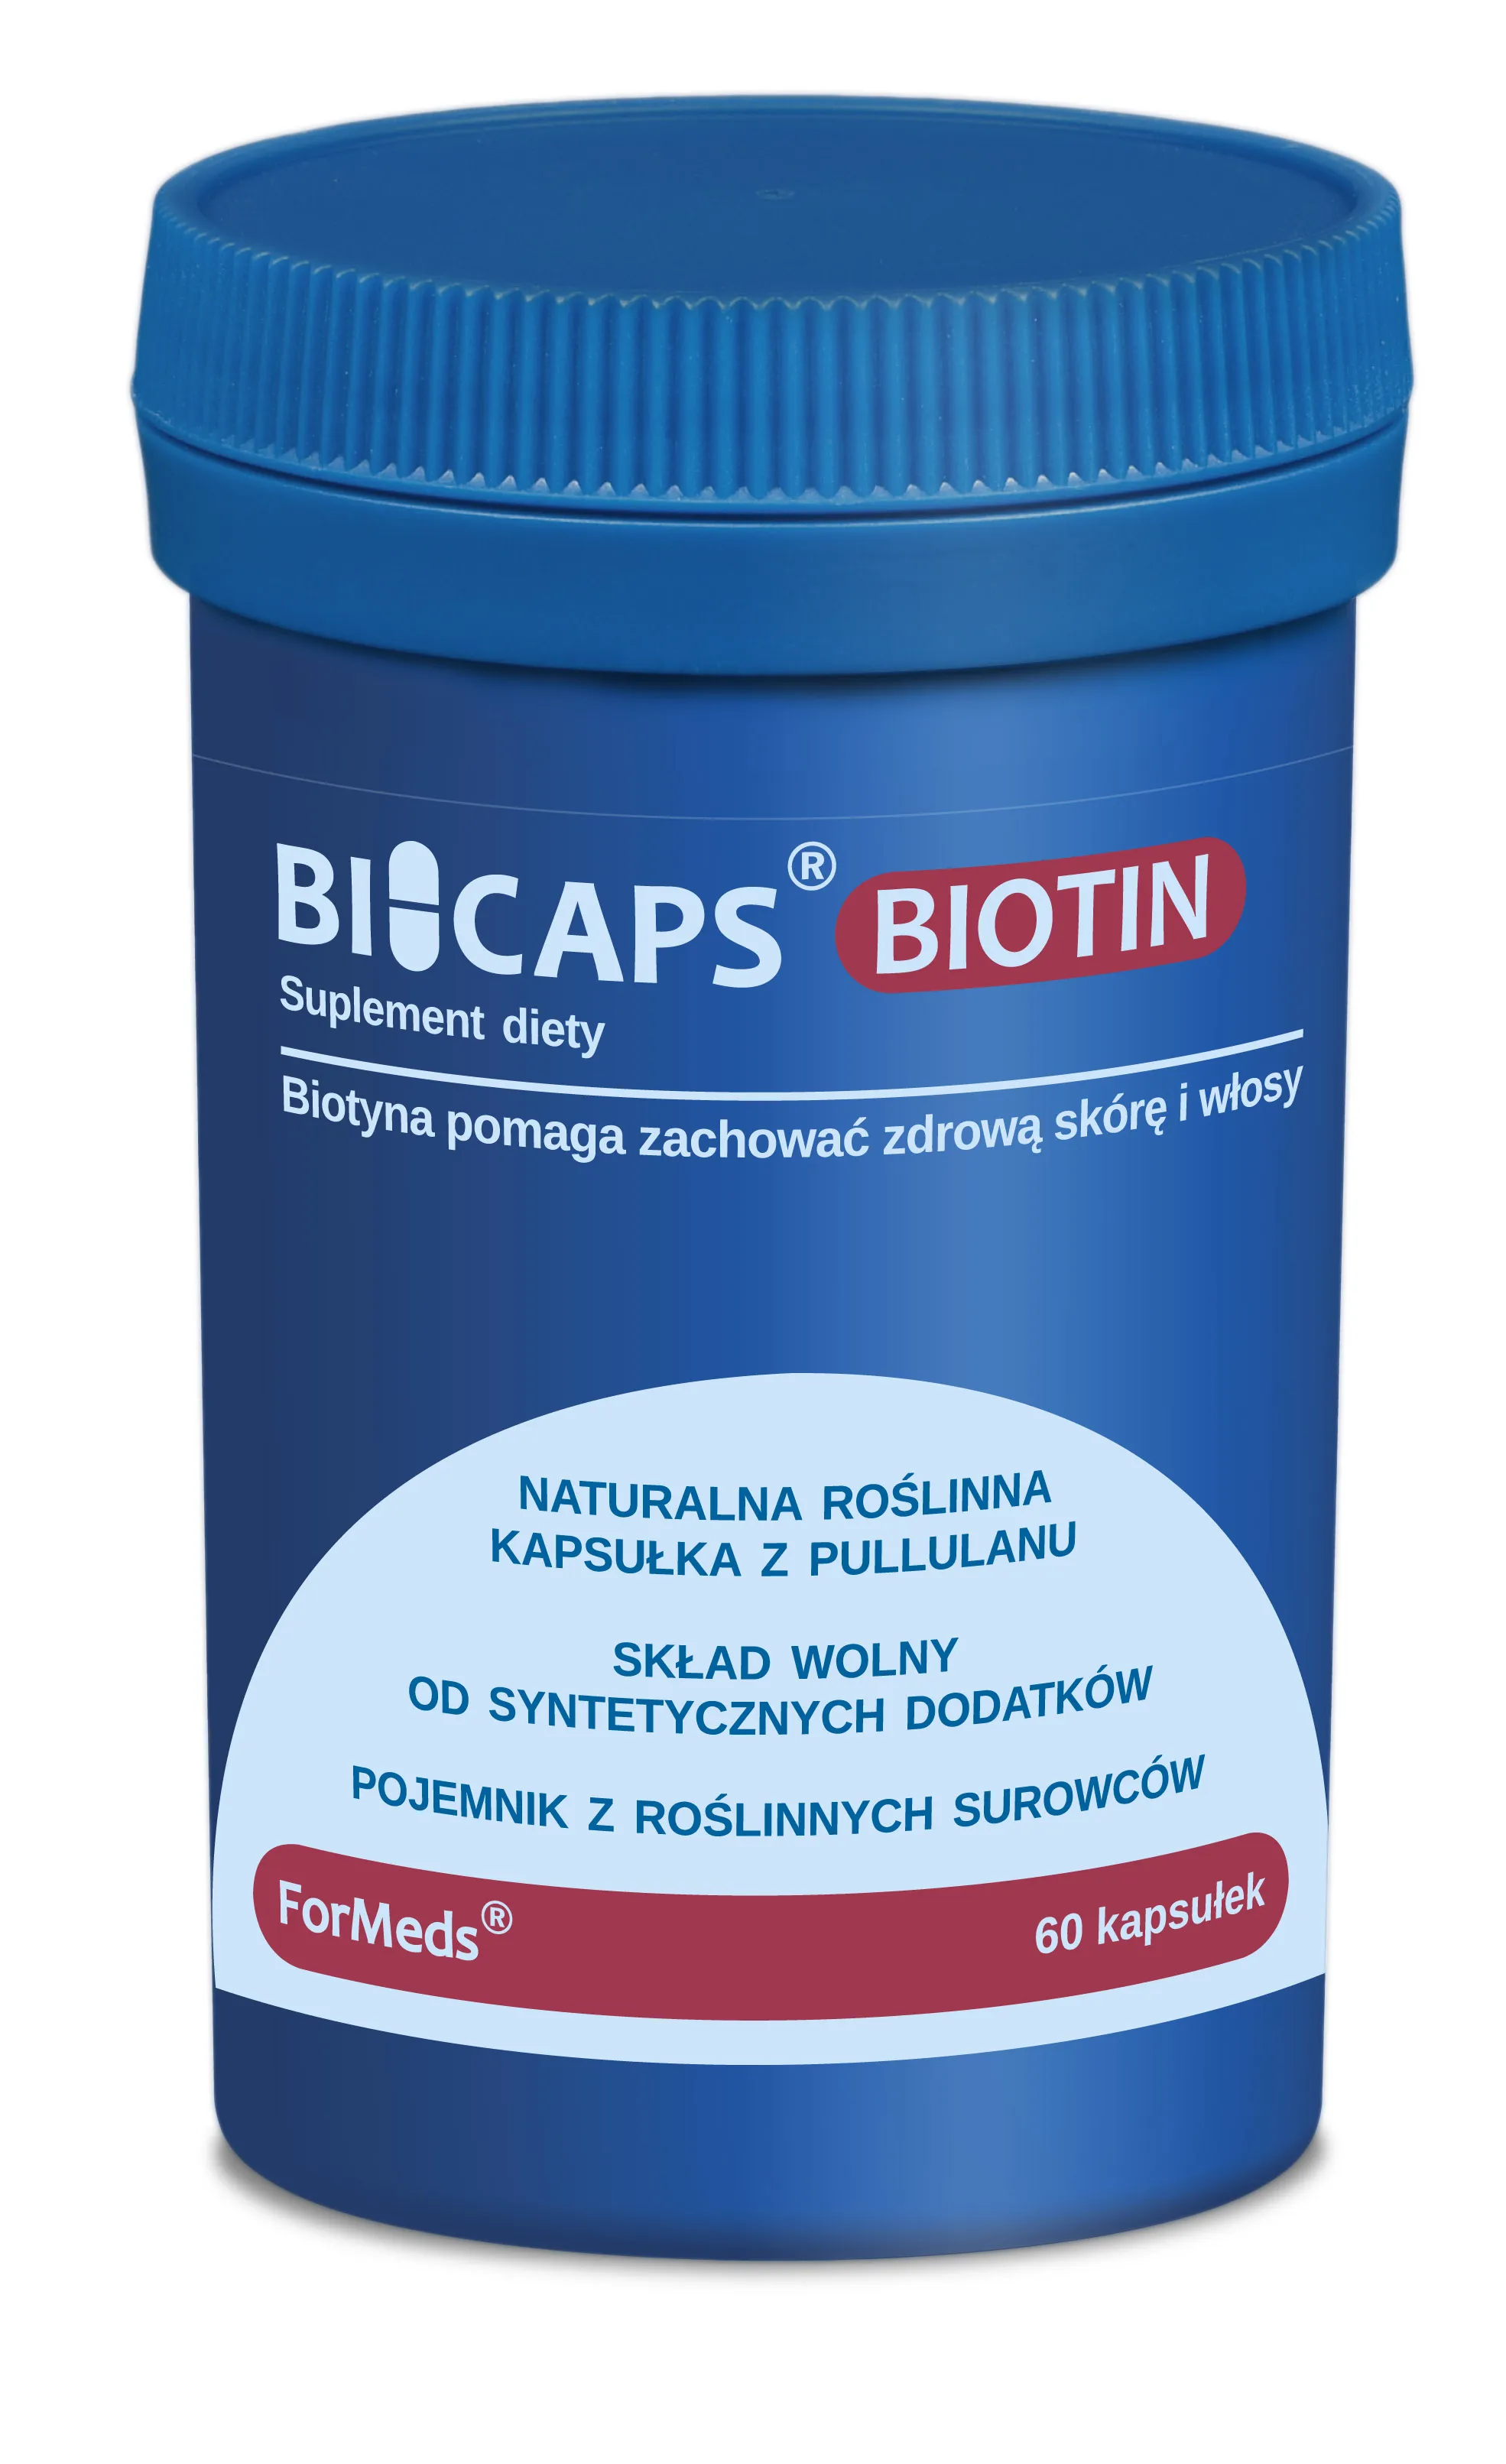 ForMeds Bicaps Biotyna, suplement diety, 60 kapsułek